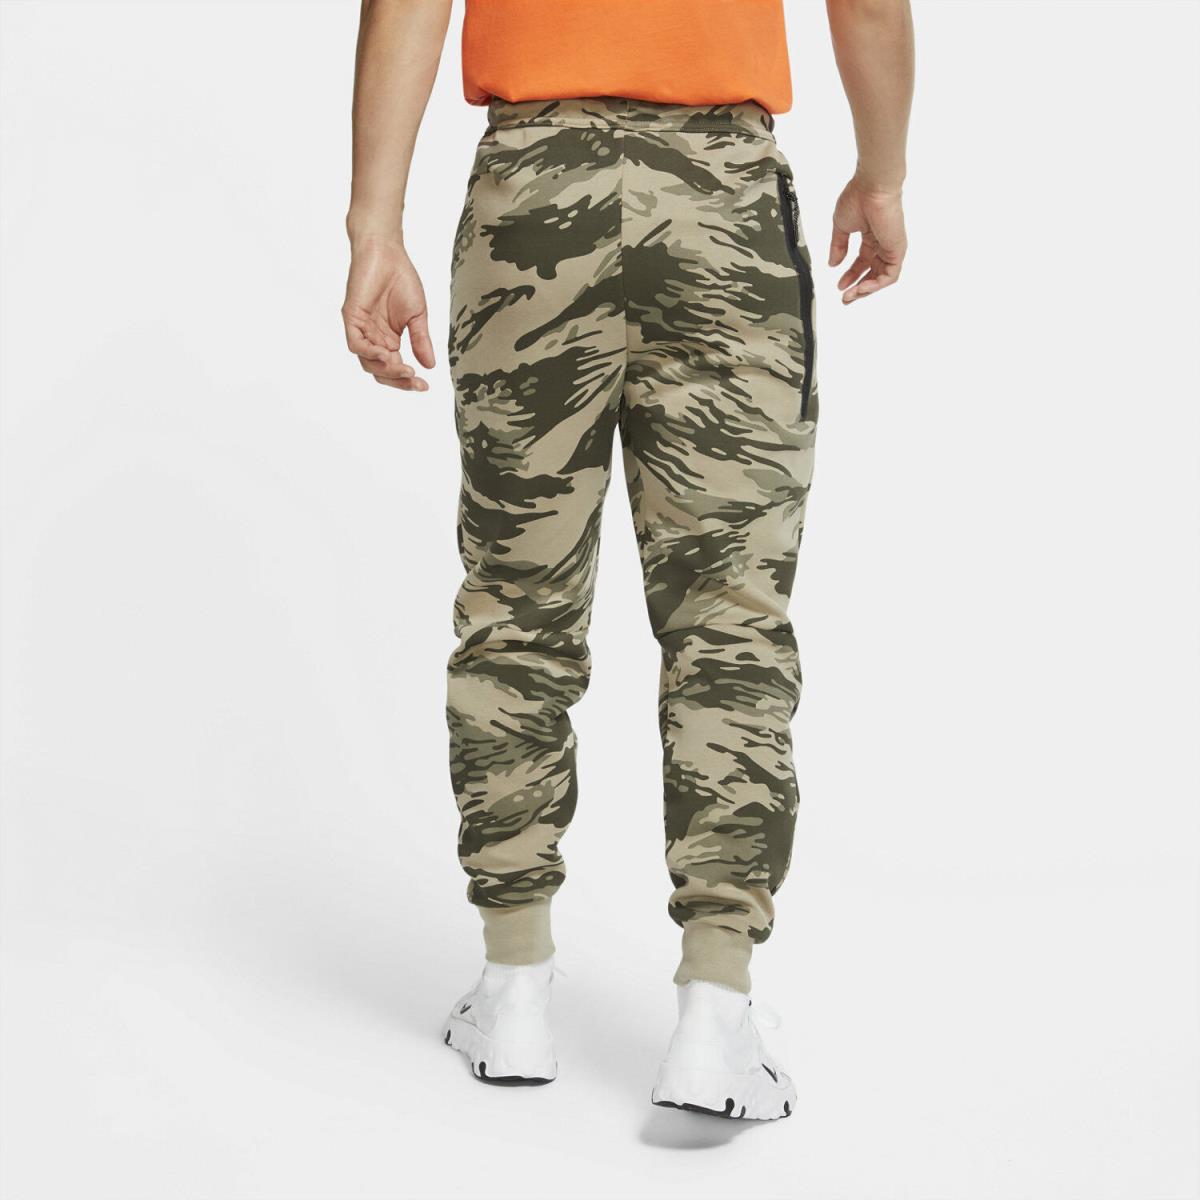 Nike Tech Fleece Pants CU4497-342 Olive Army Tan Beige Camo Jogger Tapered Slim Regular